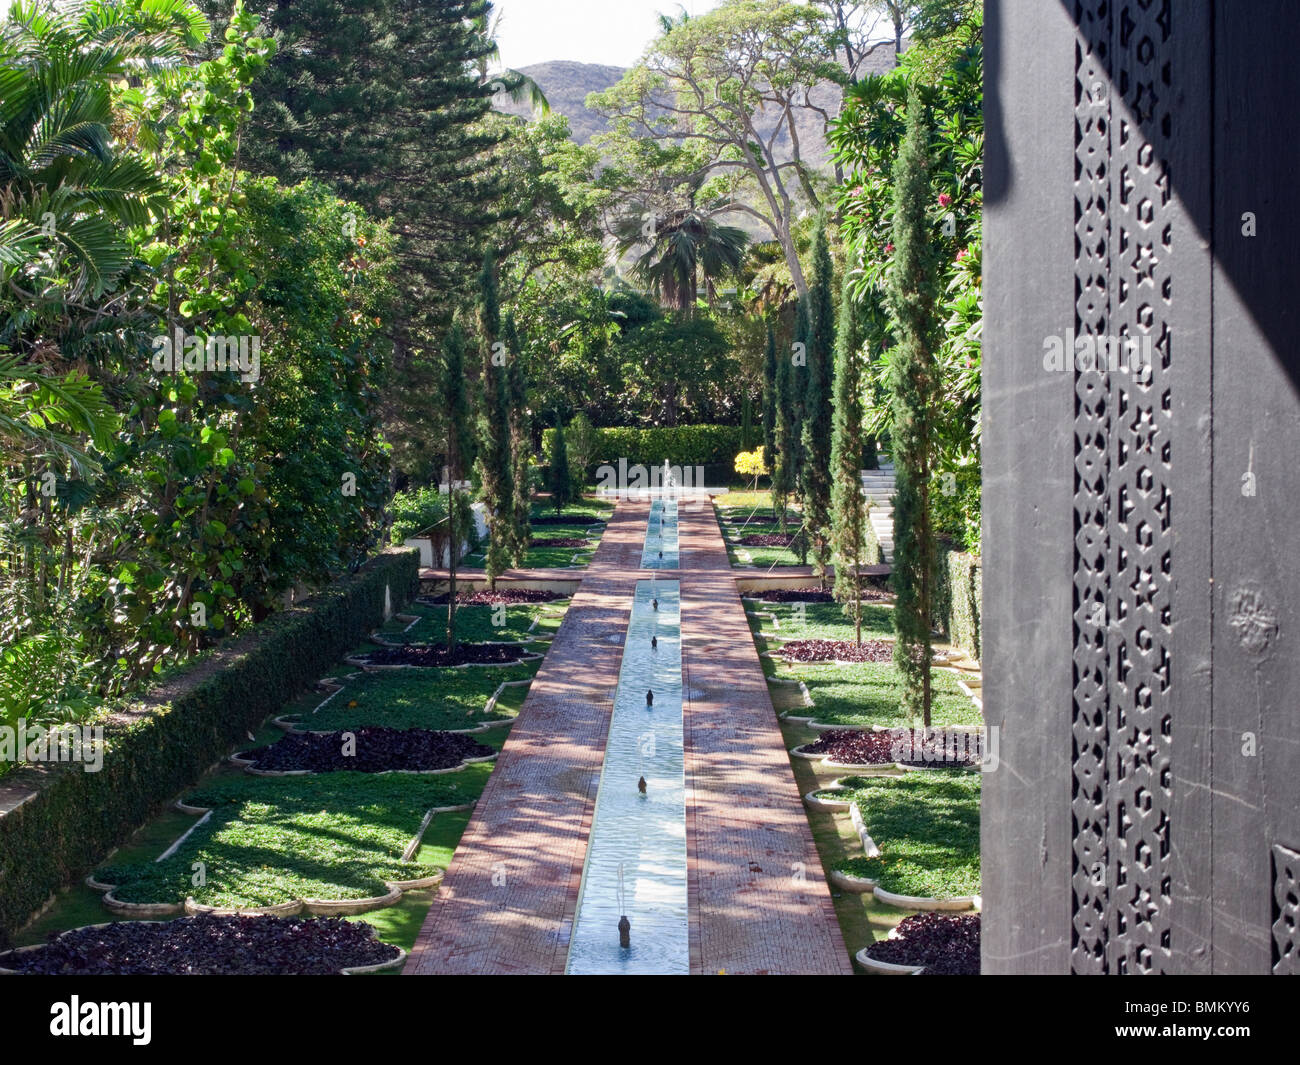 Giardino di Mughal di Doris Duke home, 'Shangri-La' su Oahu. Foto Stock